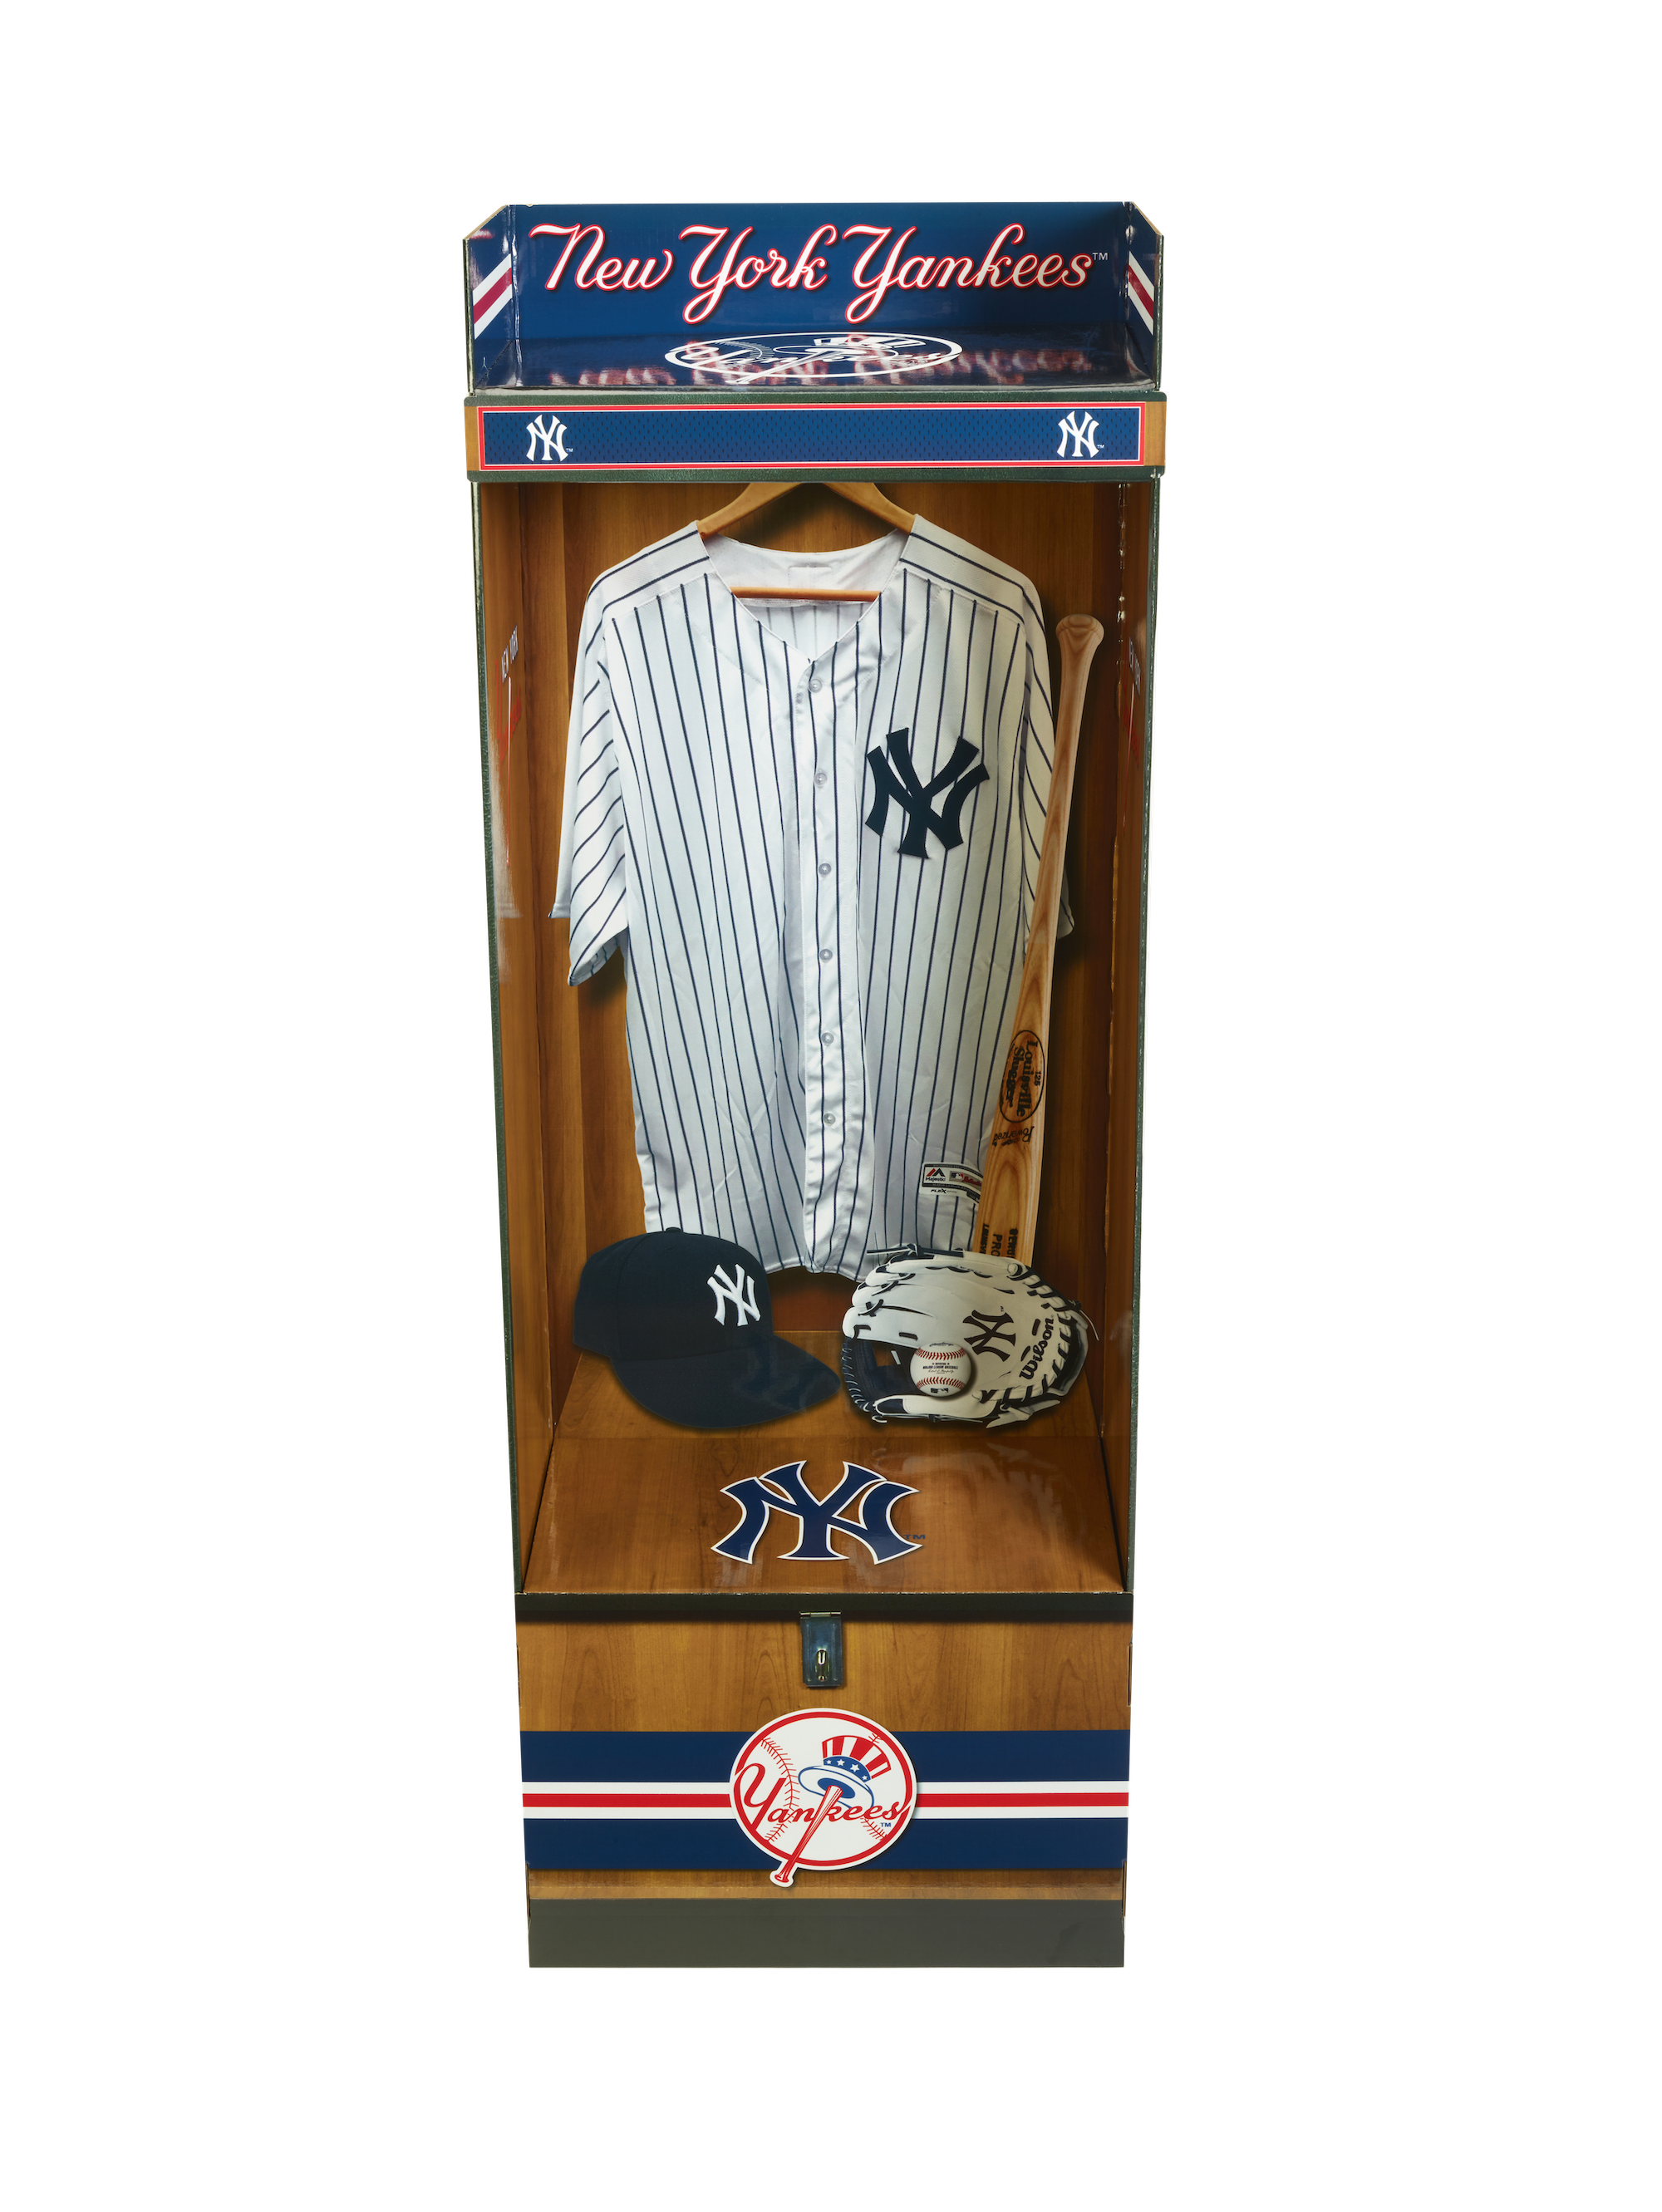 Cheap New York Yankees Apparel, Discount Yankees Gear, MLB Yankees